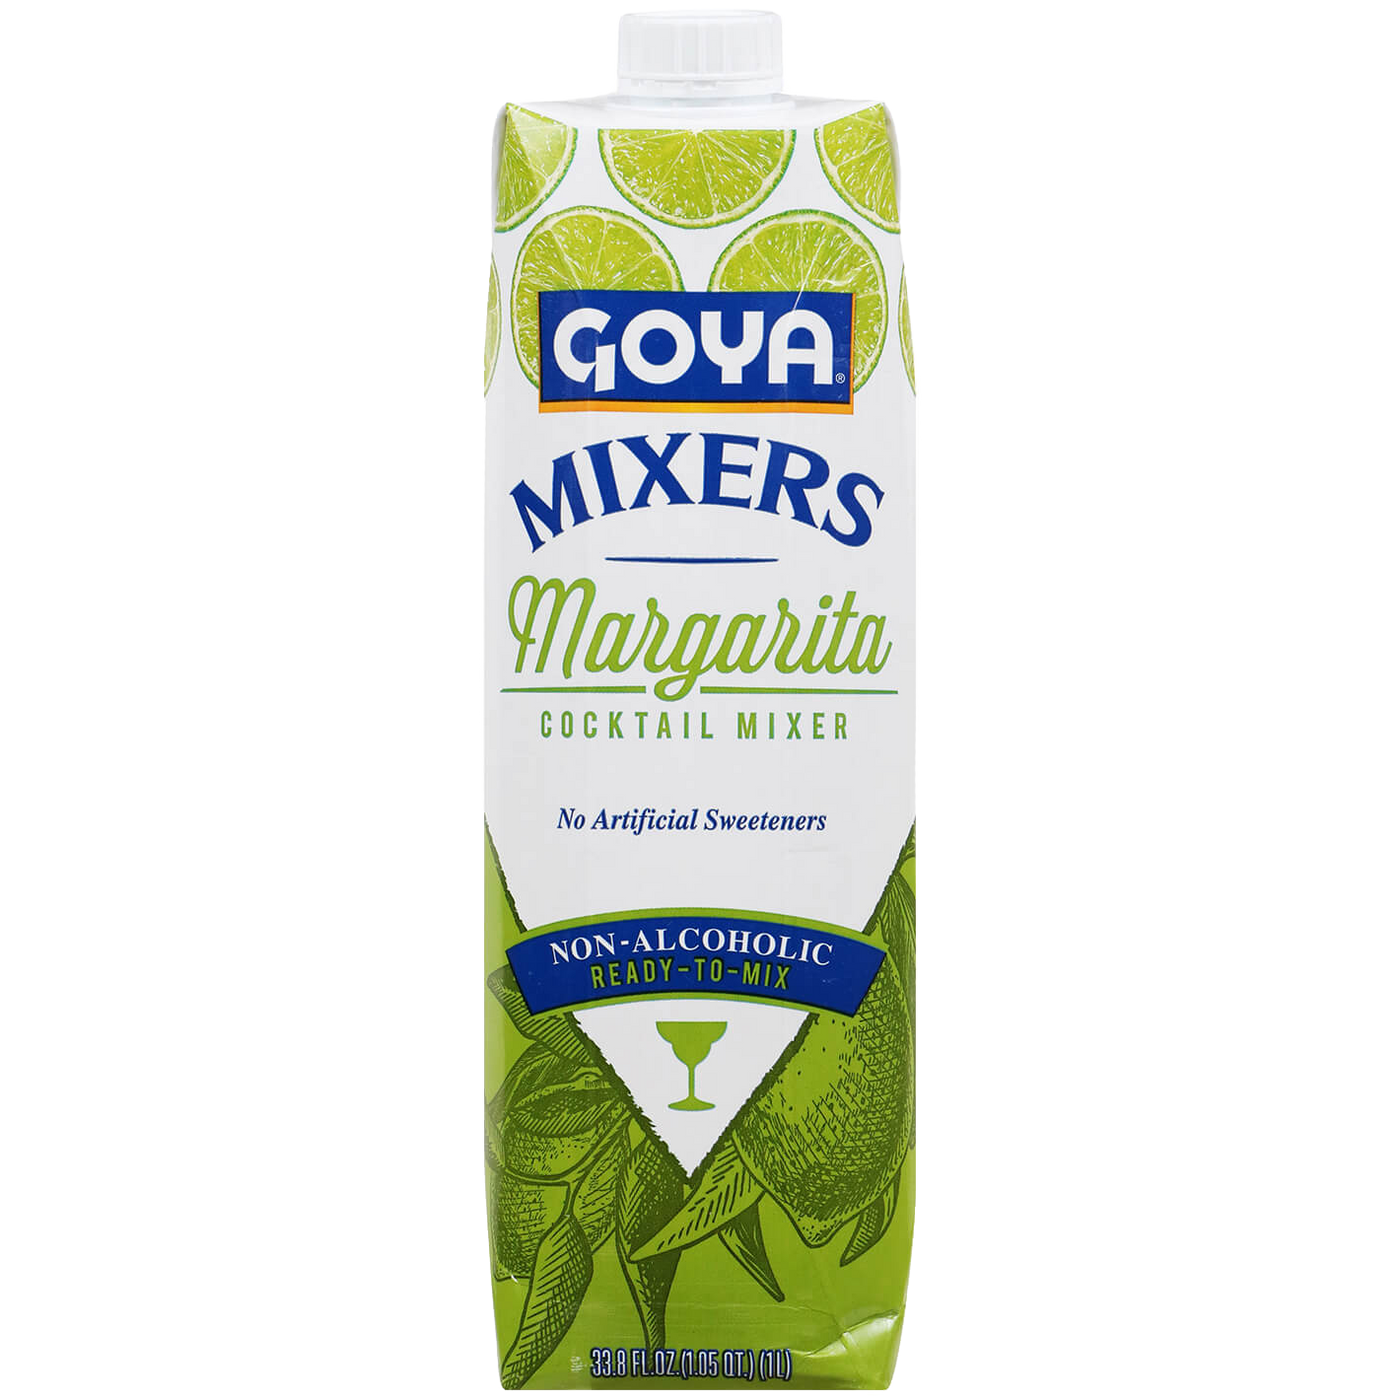   Goya Margarita Cocktail Mixer